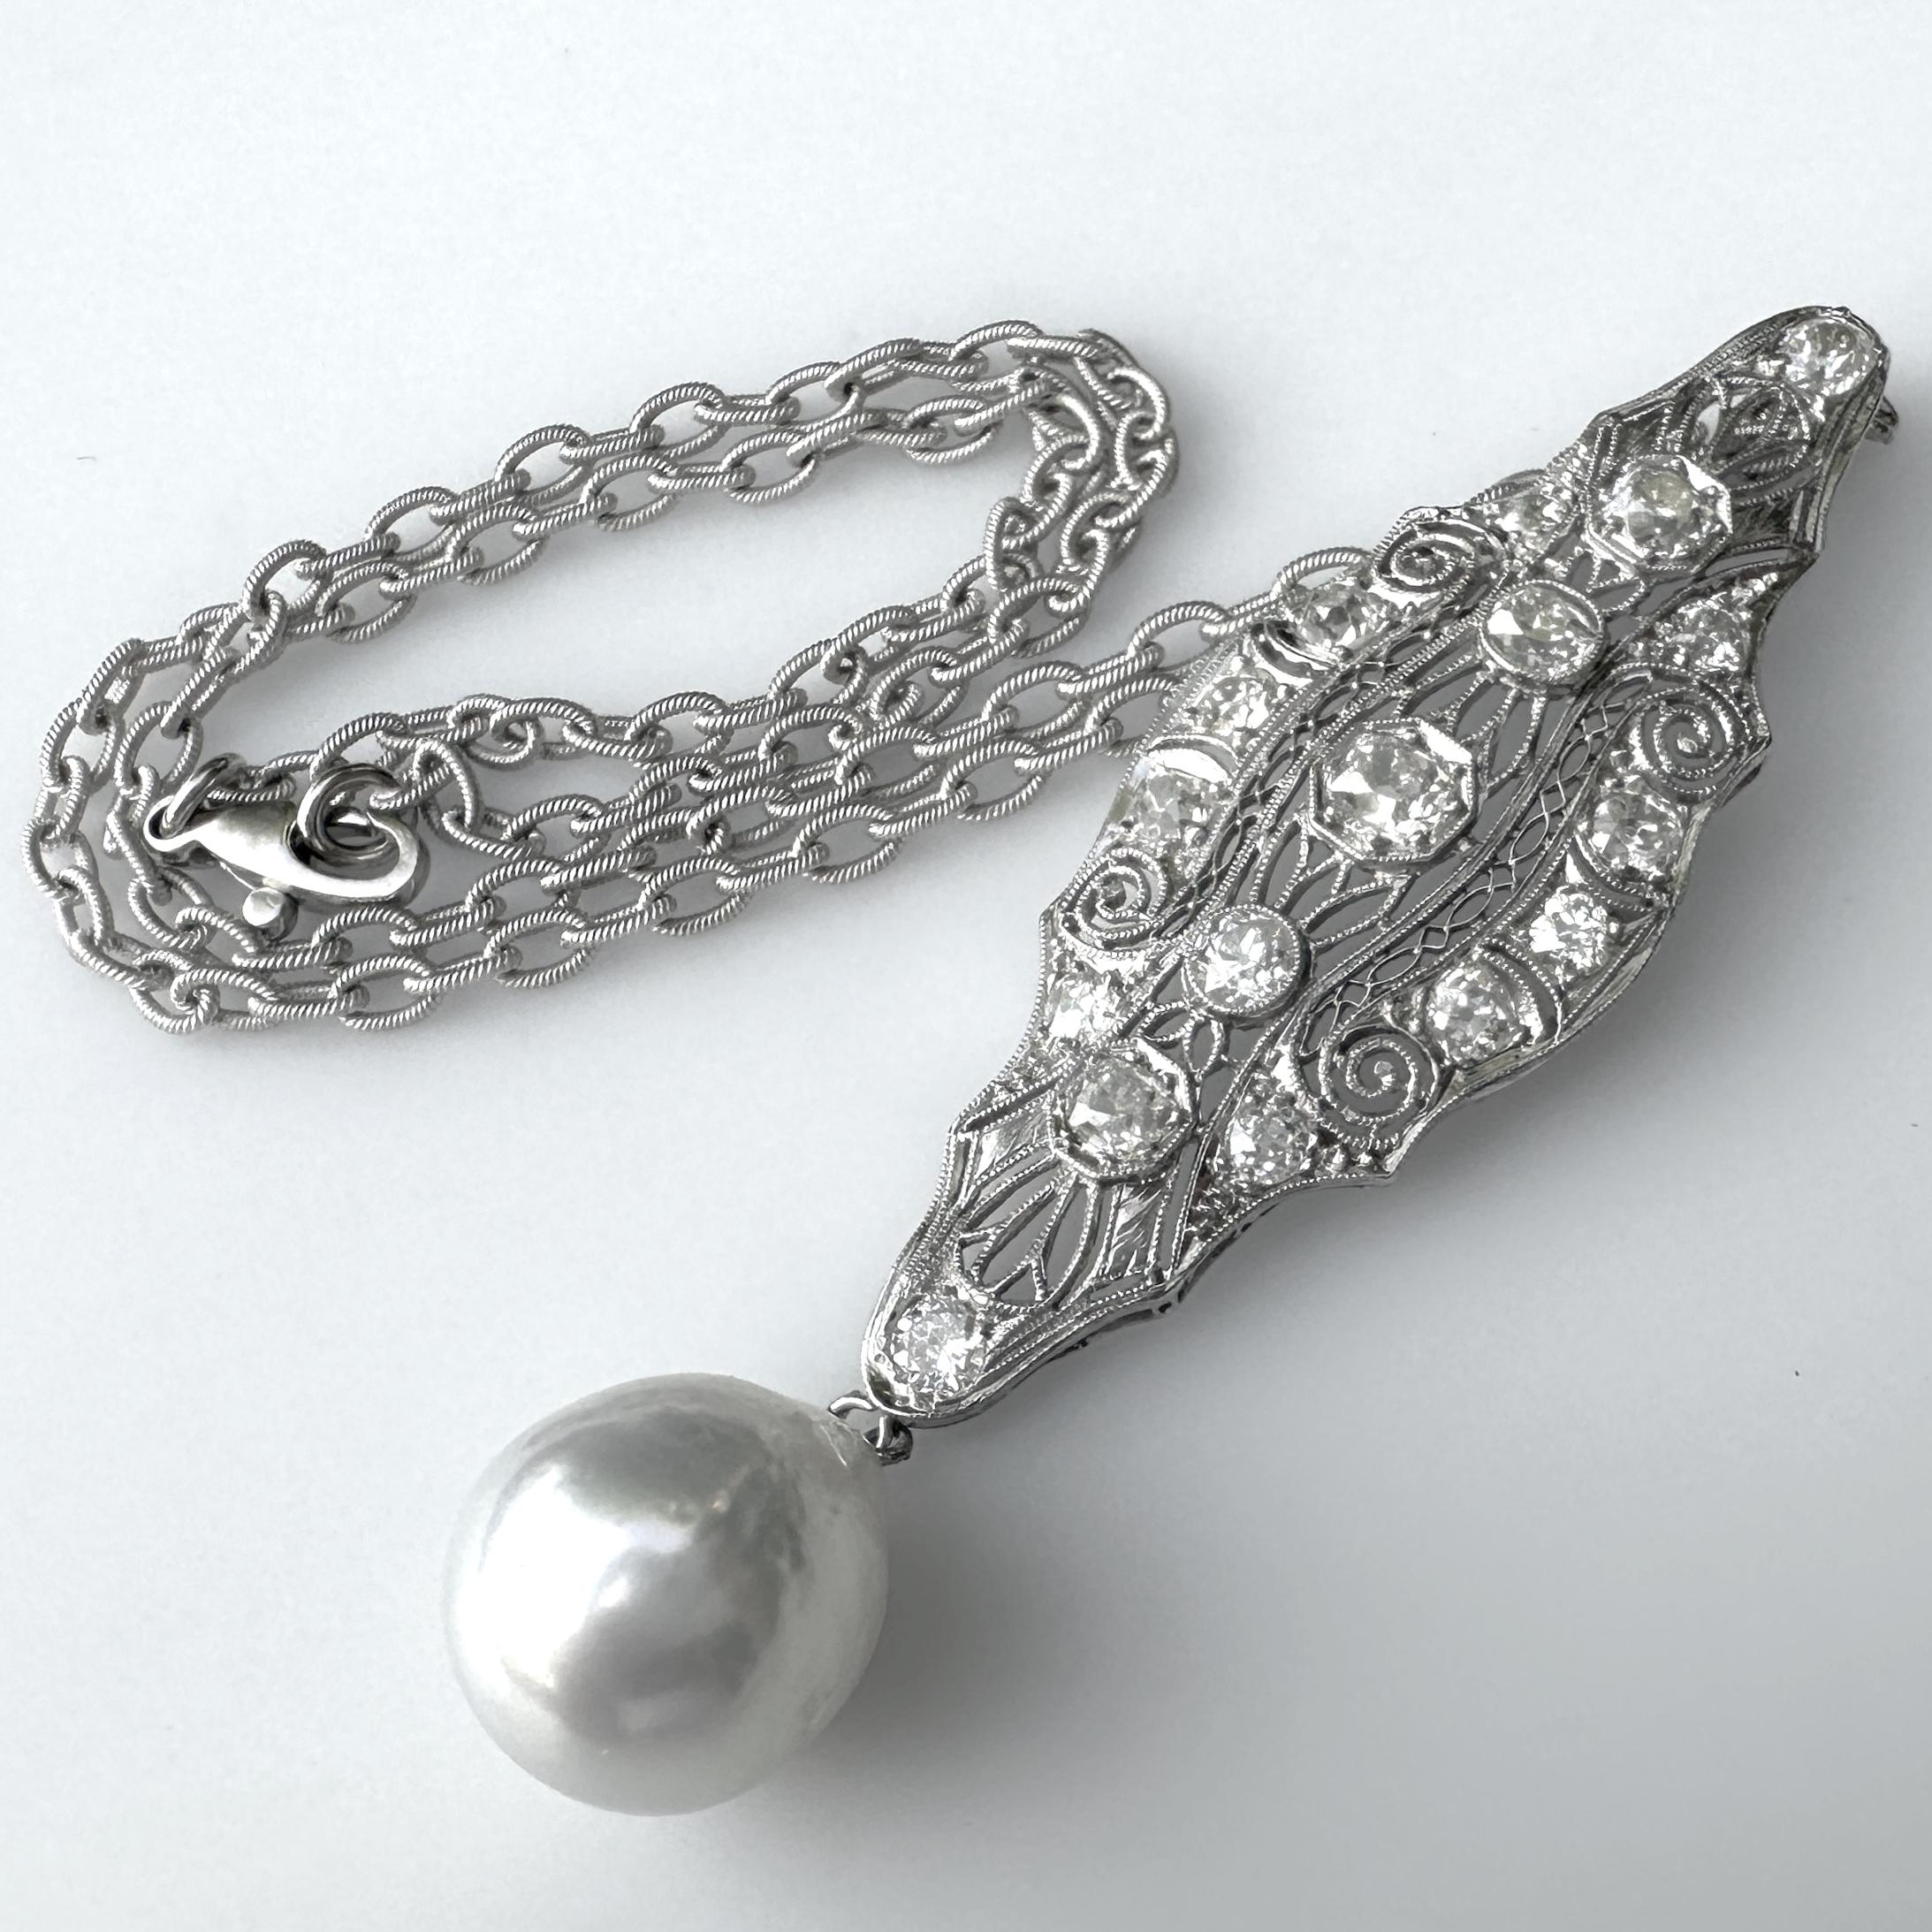 Old European Cut 2.8ct Diamond Pendant in Platinum w South Sea Pearl Drop & 18K White Gold Chain For Sale